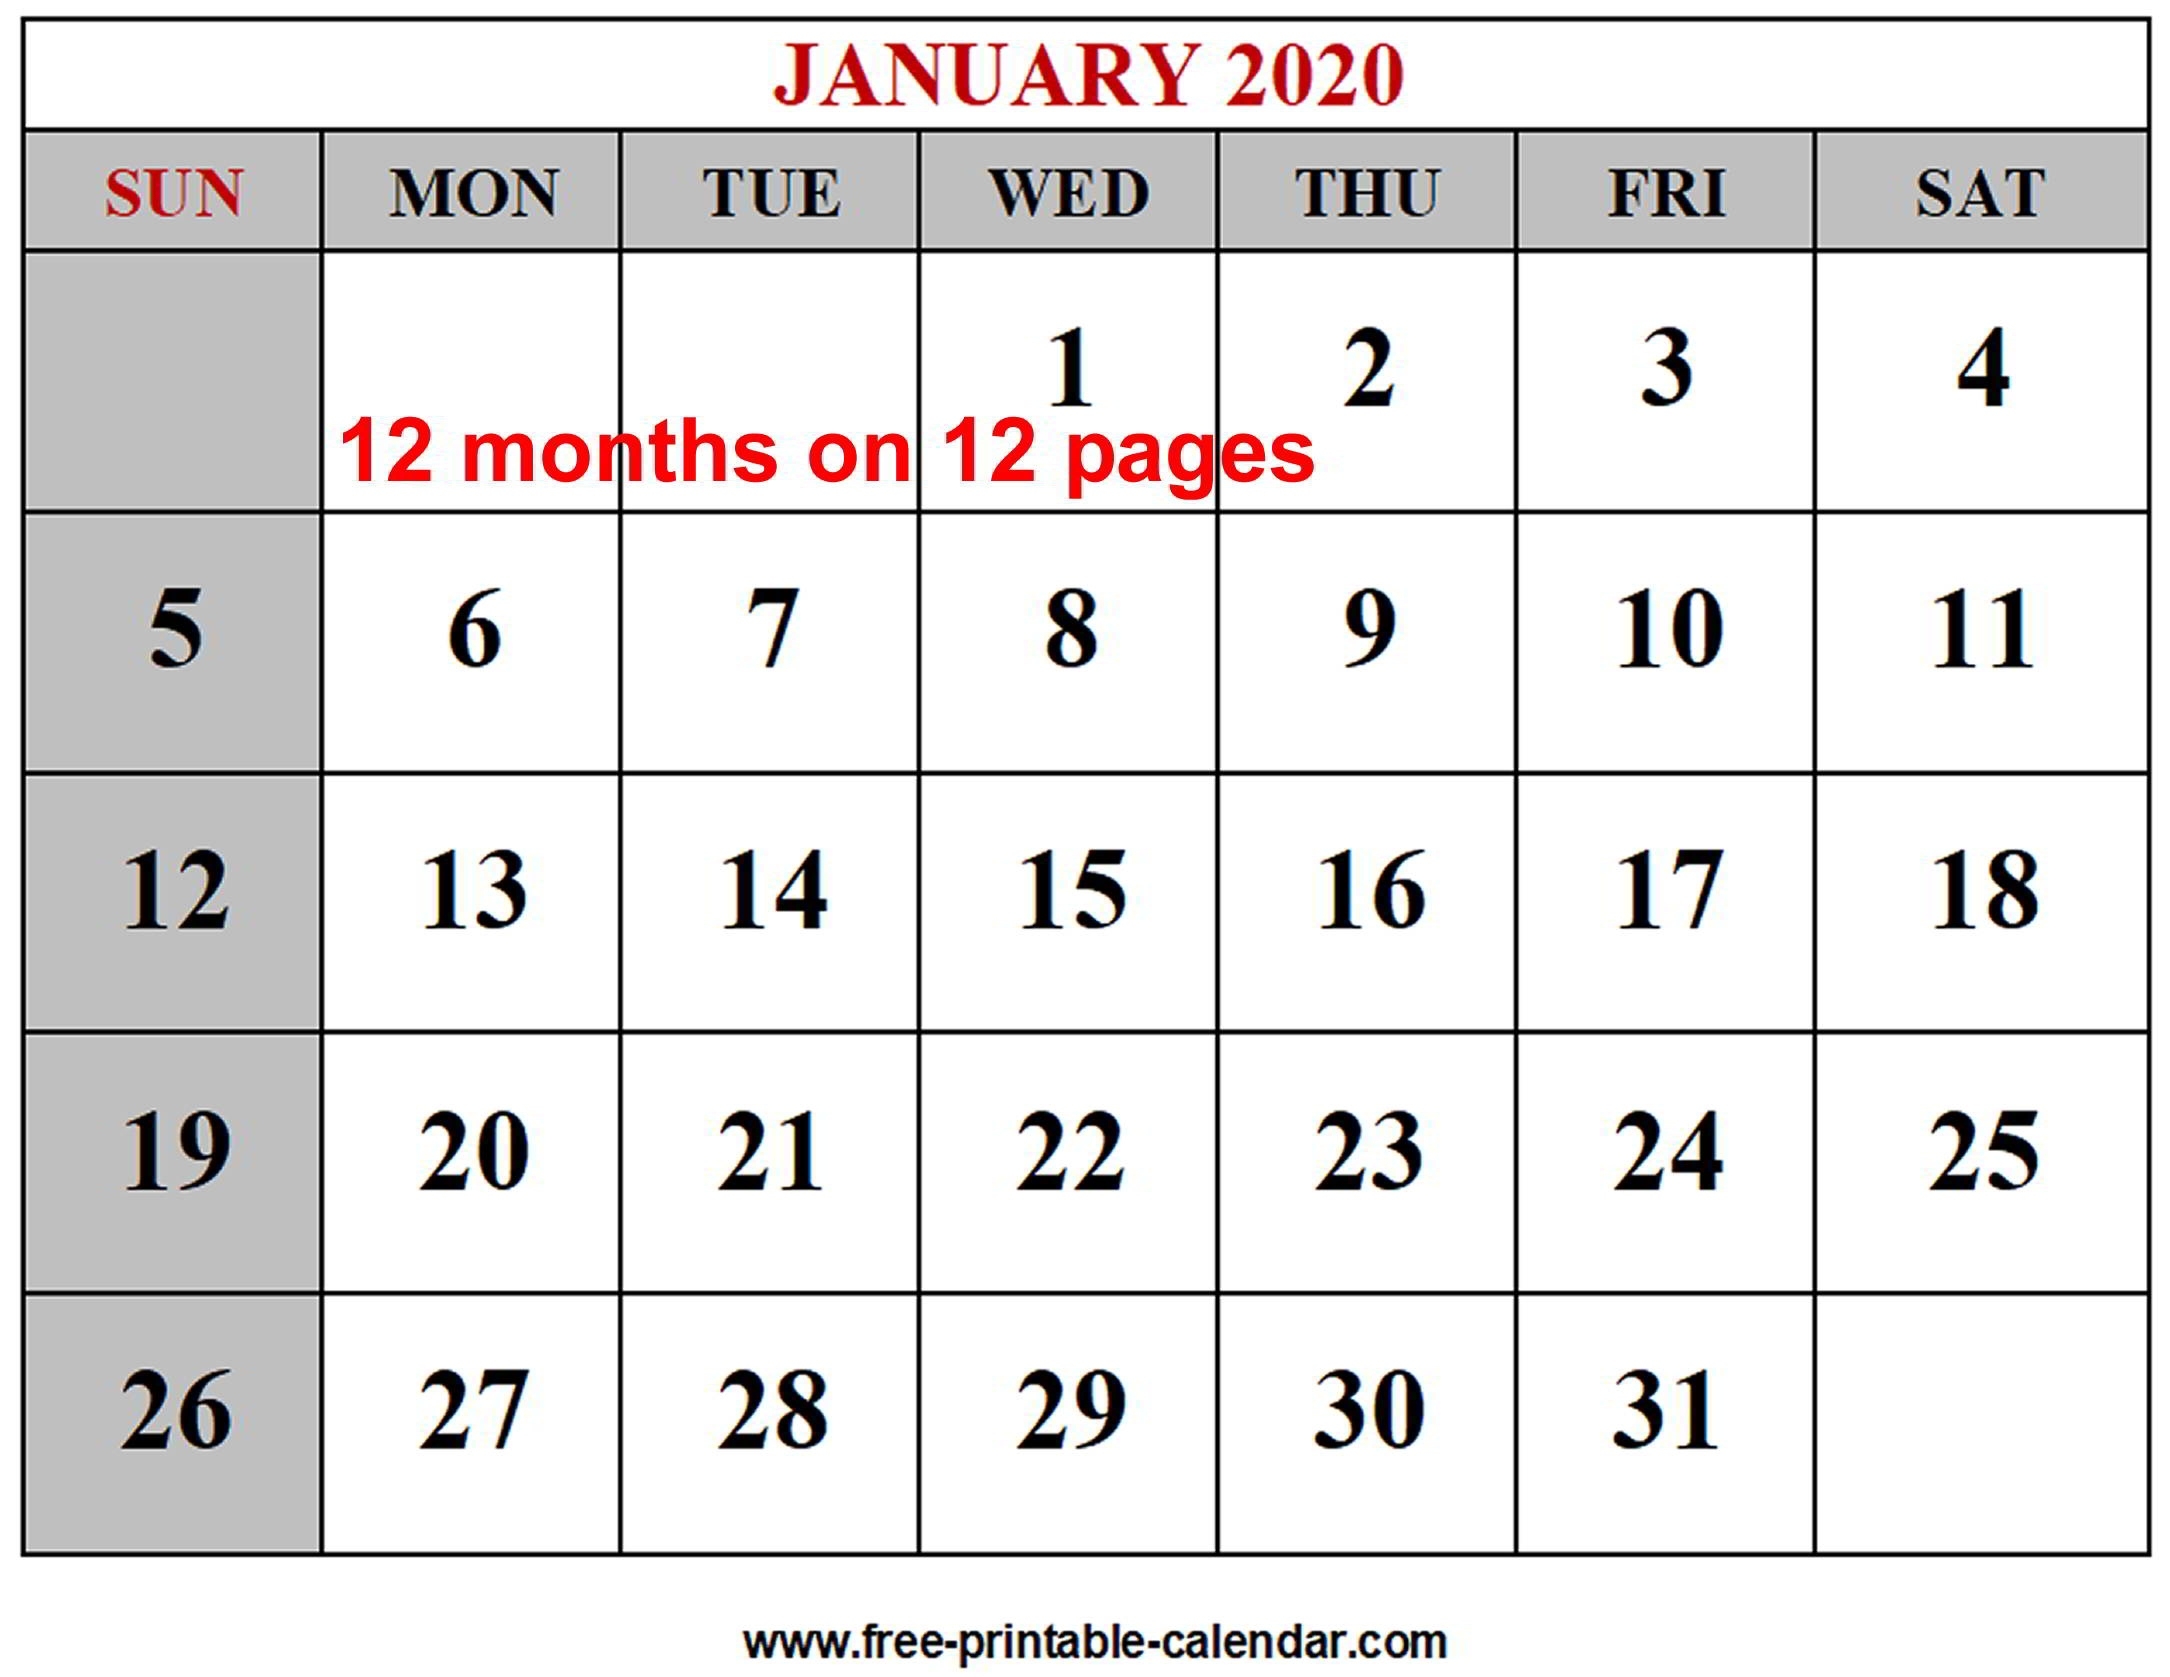 Year 2020 Calendar Templates - Free-Printable-Calendar Remarkable Free Printable 2020 Monthly Calendar